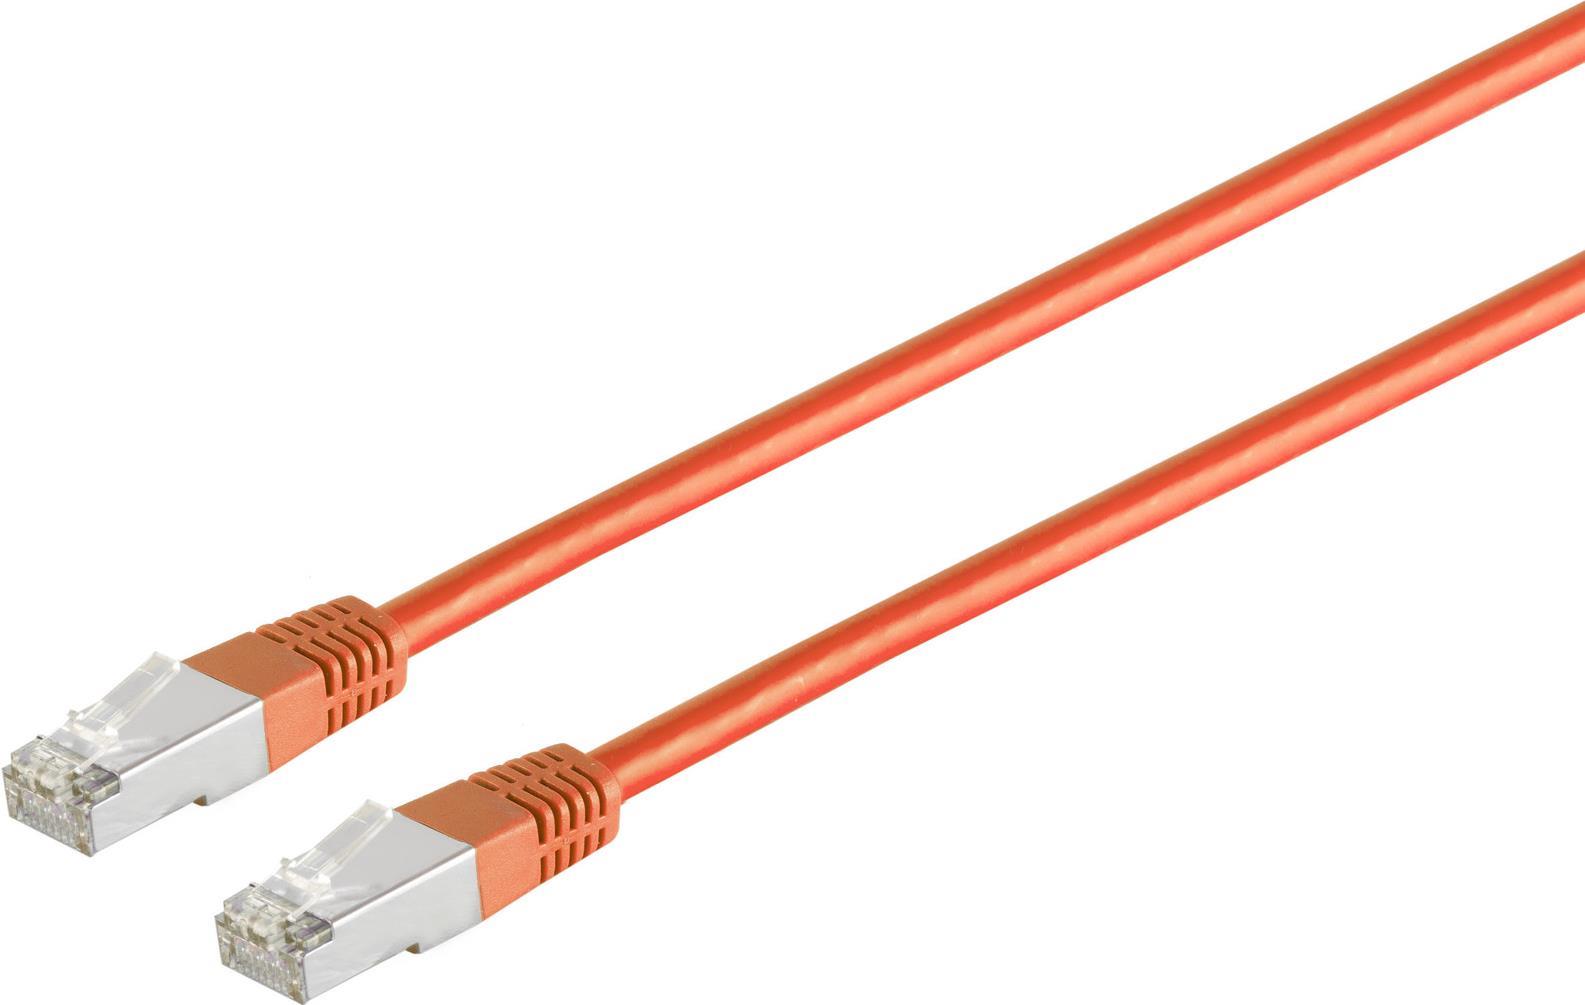 S/CONN maximum connectivity Netzwerkkabel-Patchkabel, cat. 5e, SF/UTP, orange, 1,5m (75211-1.5O)